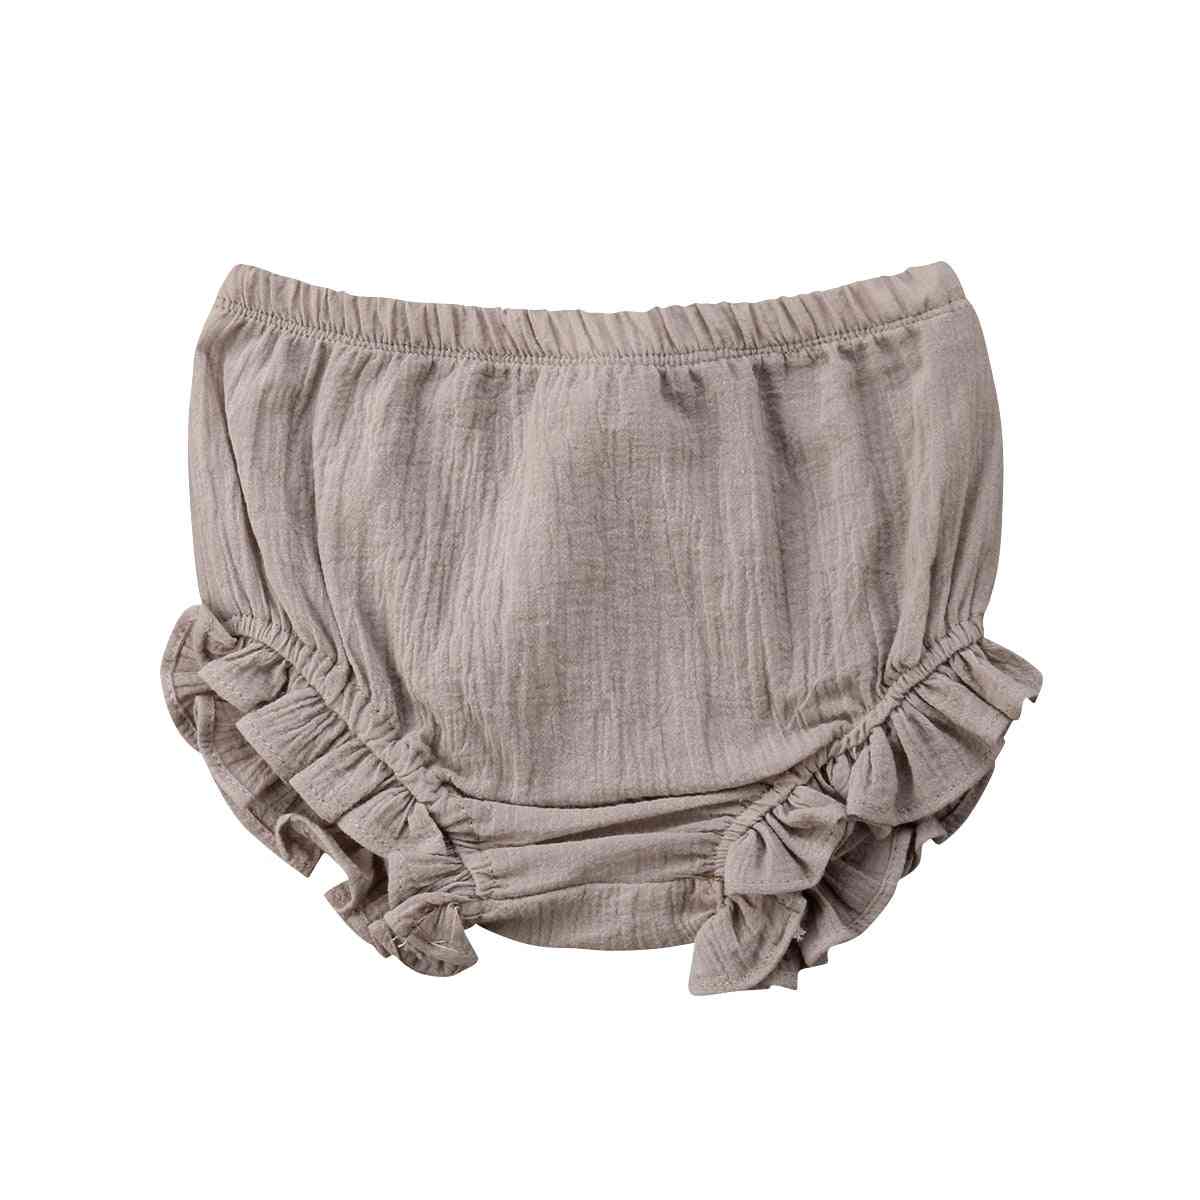 Infant Baby Boy Girl Ruffles Shorts, Cotton Nappy Diaper Covers Cute Panties